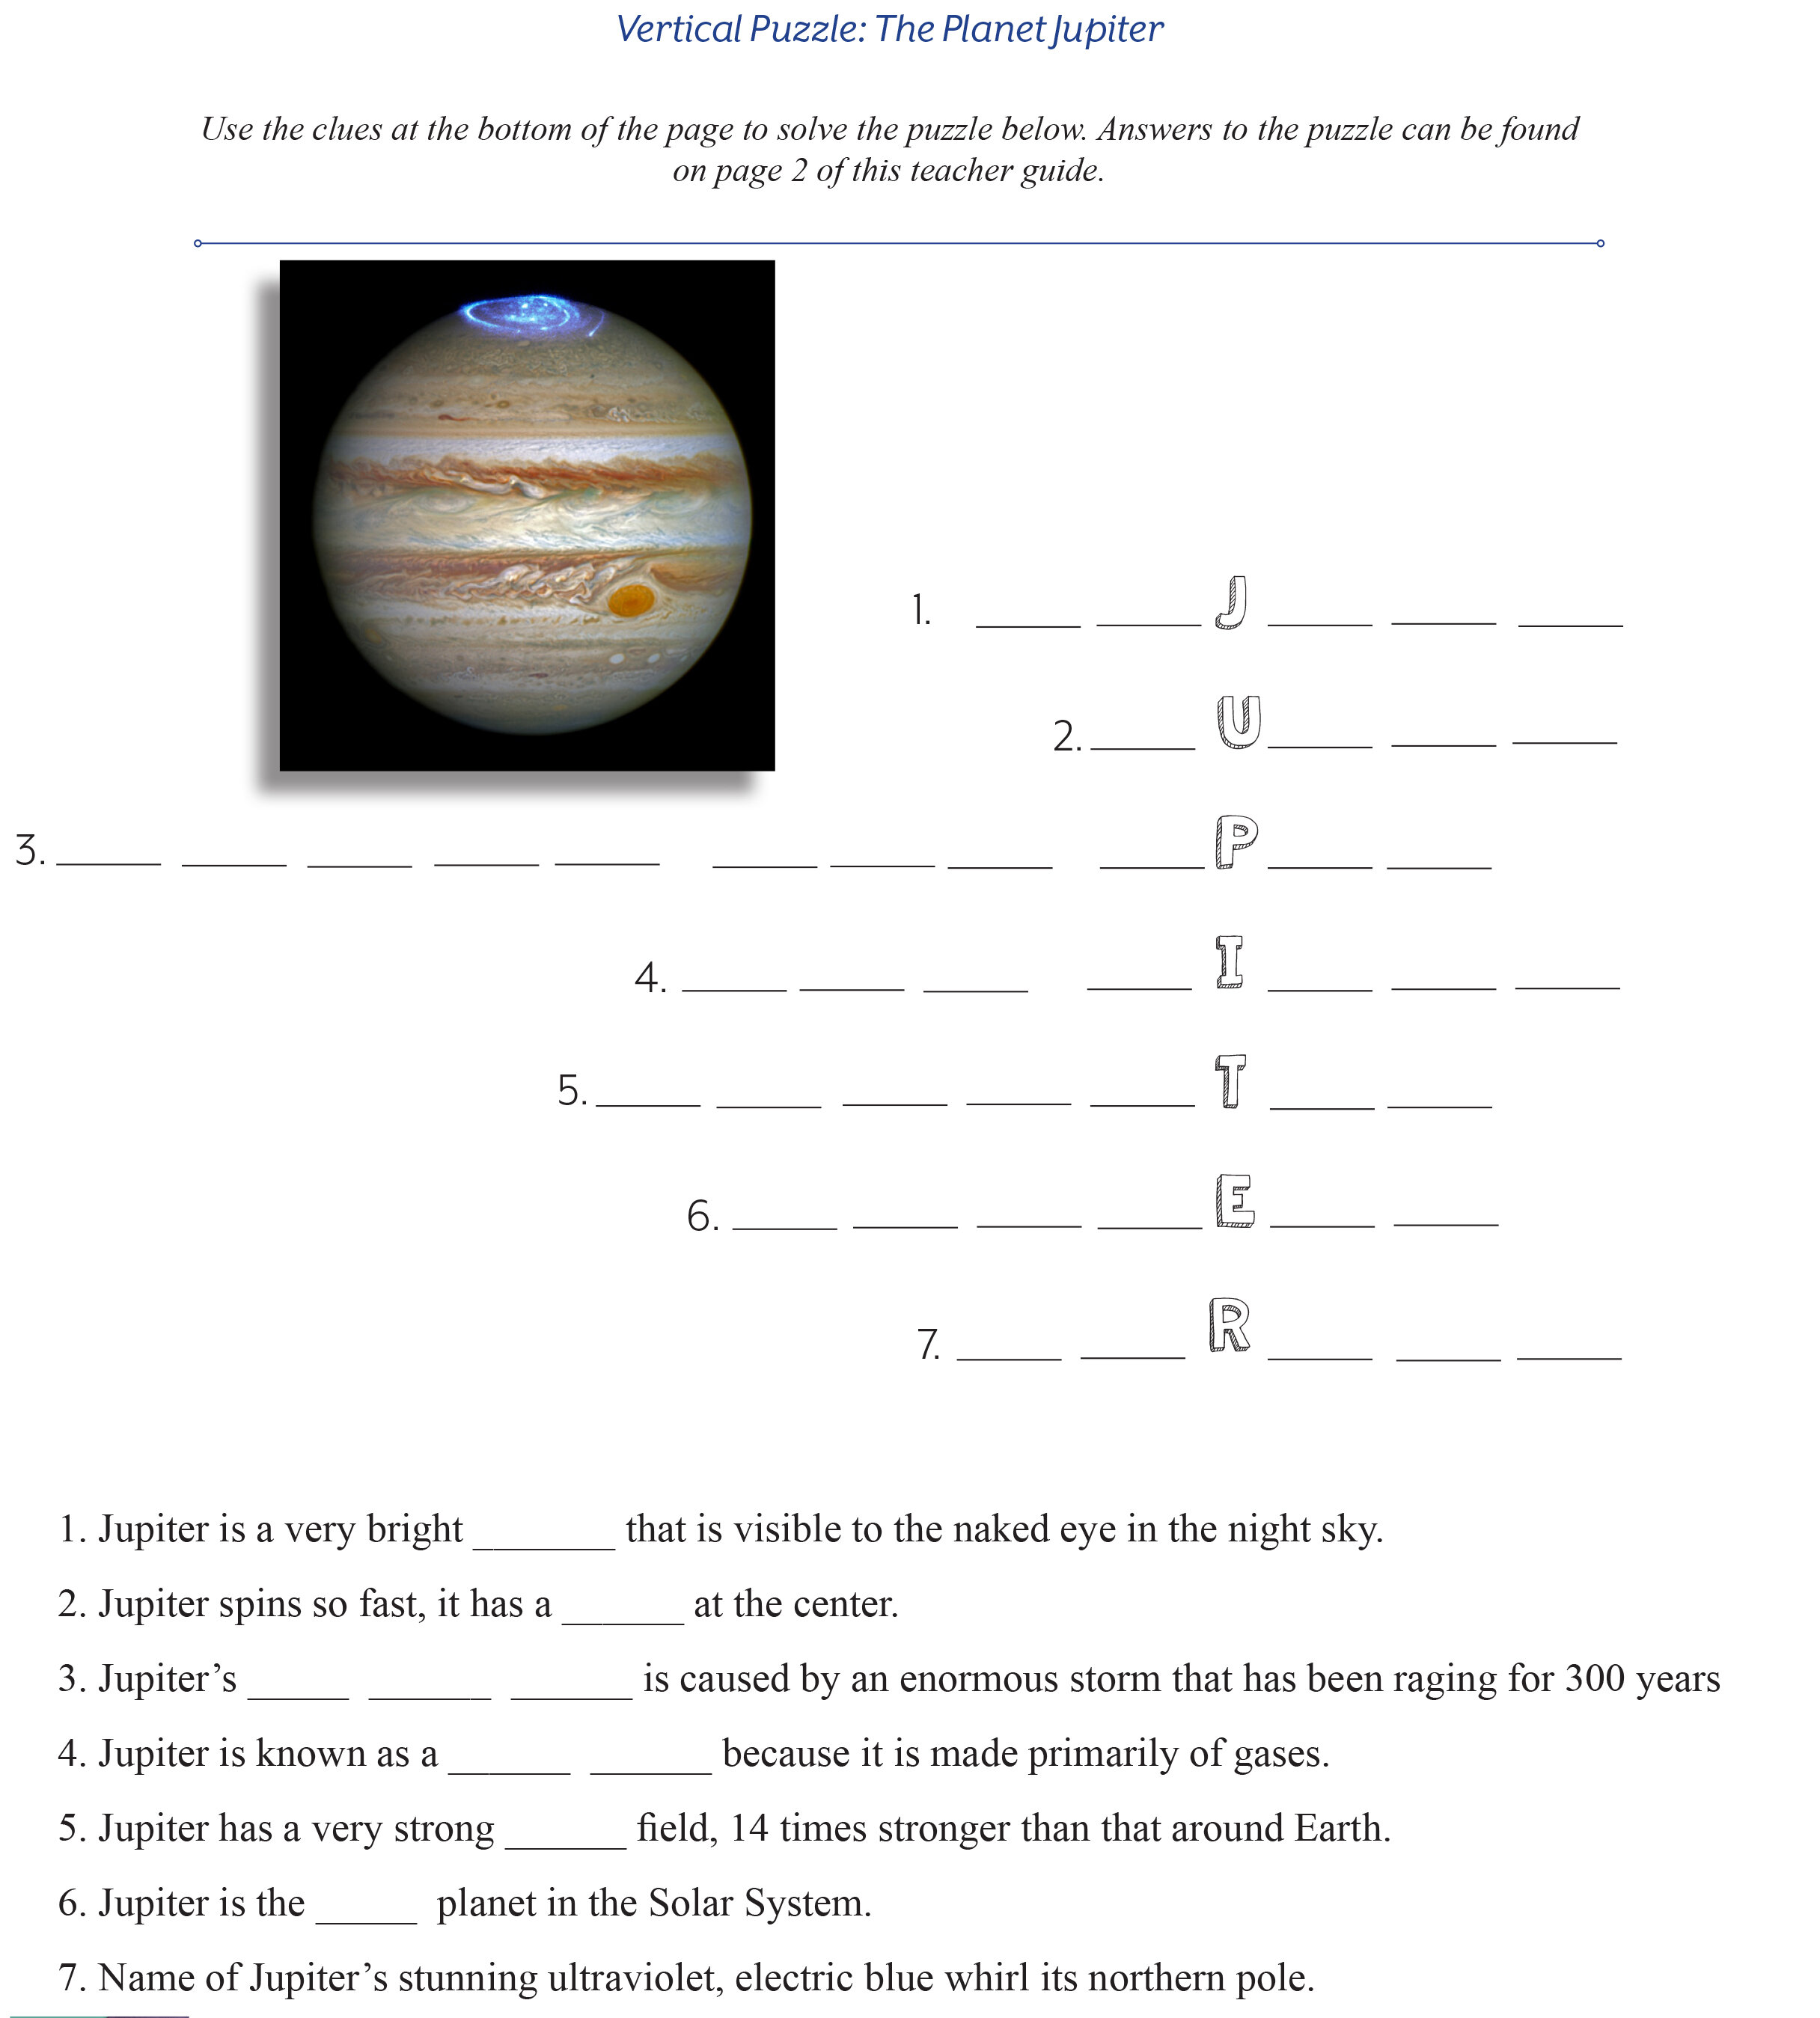 The Planet Jupiter Puzzle.jpg